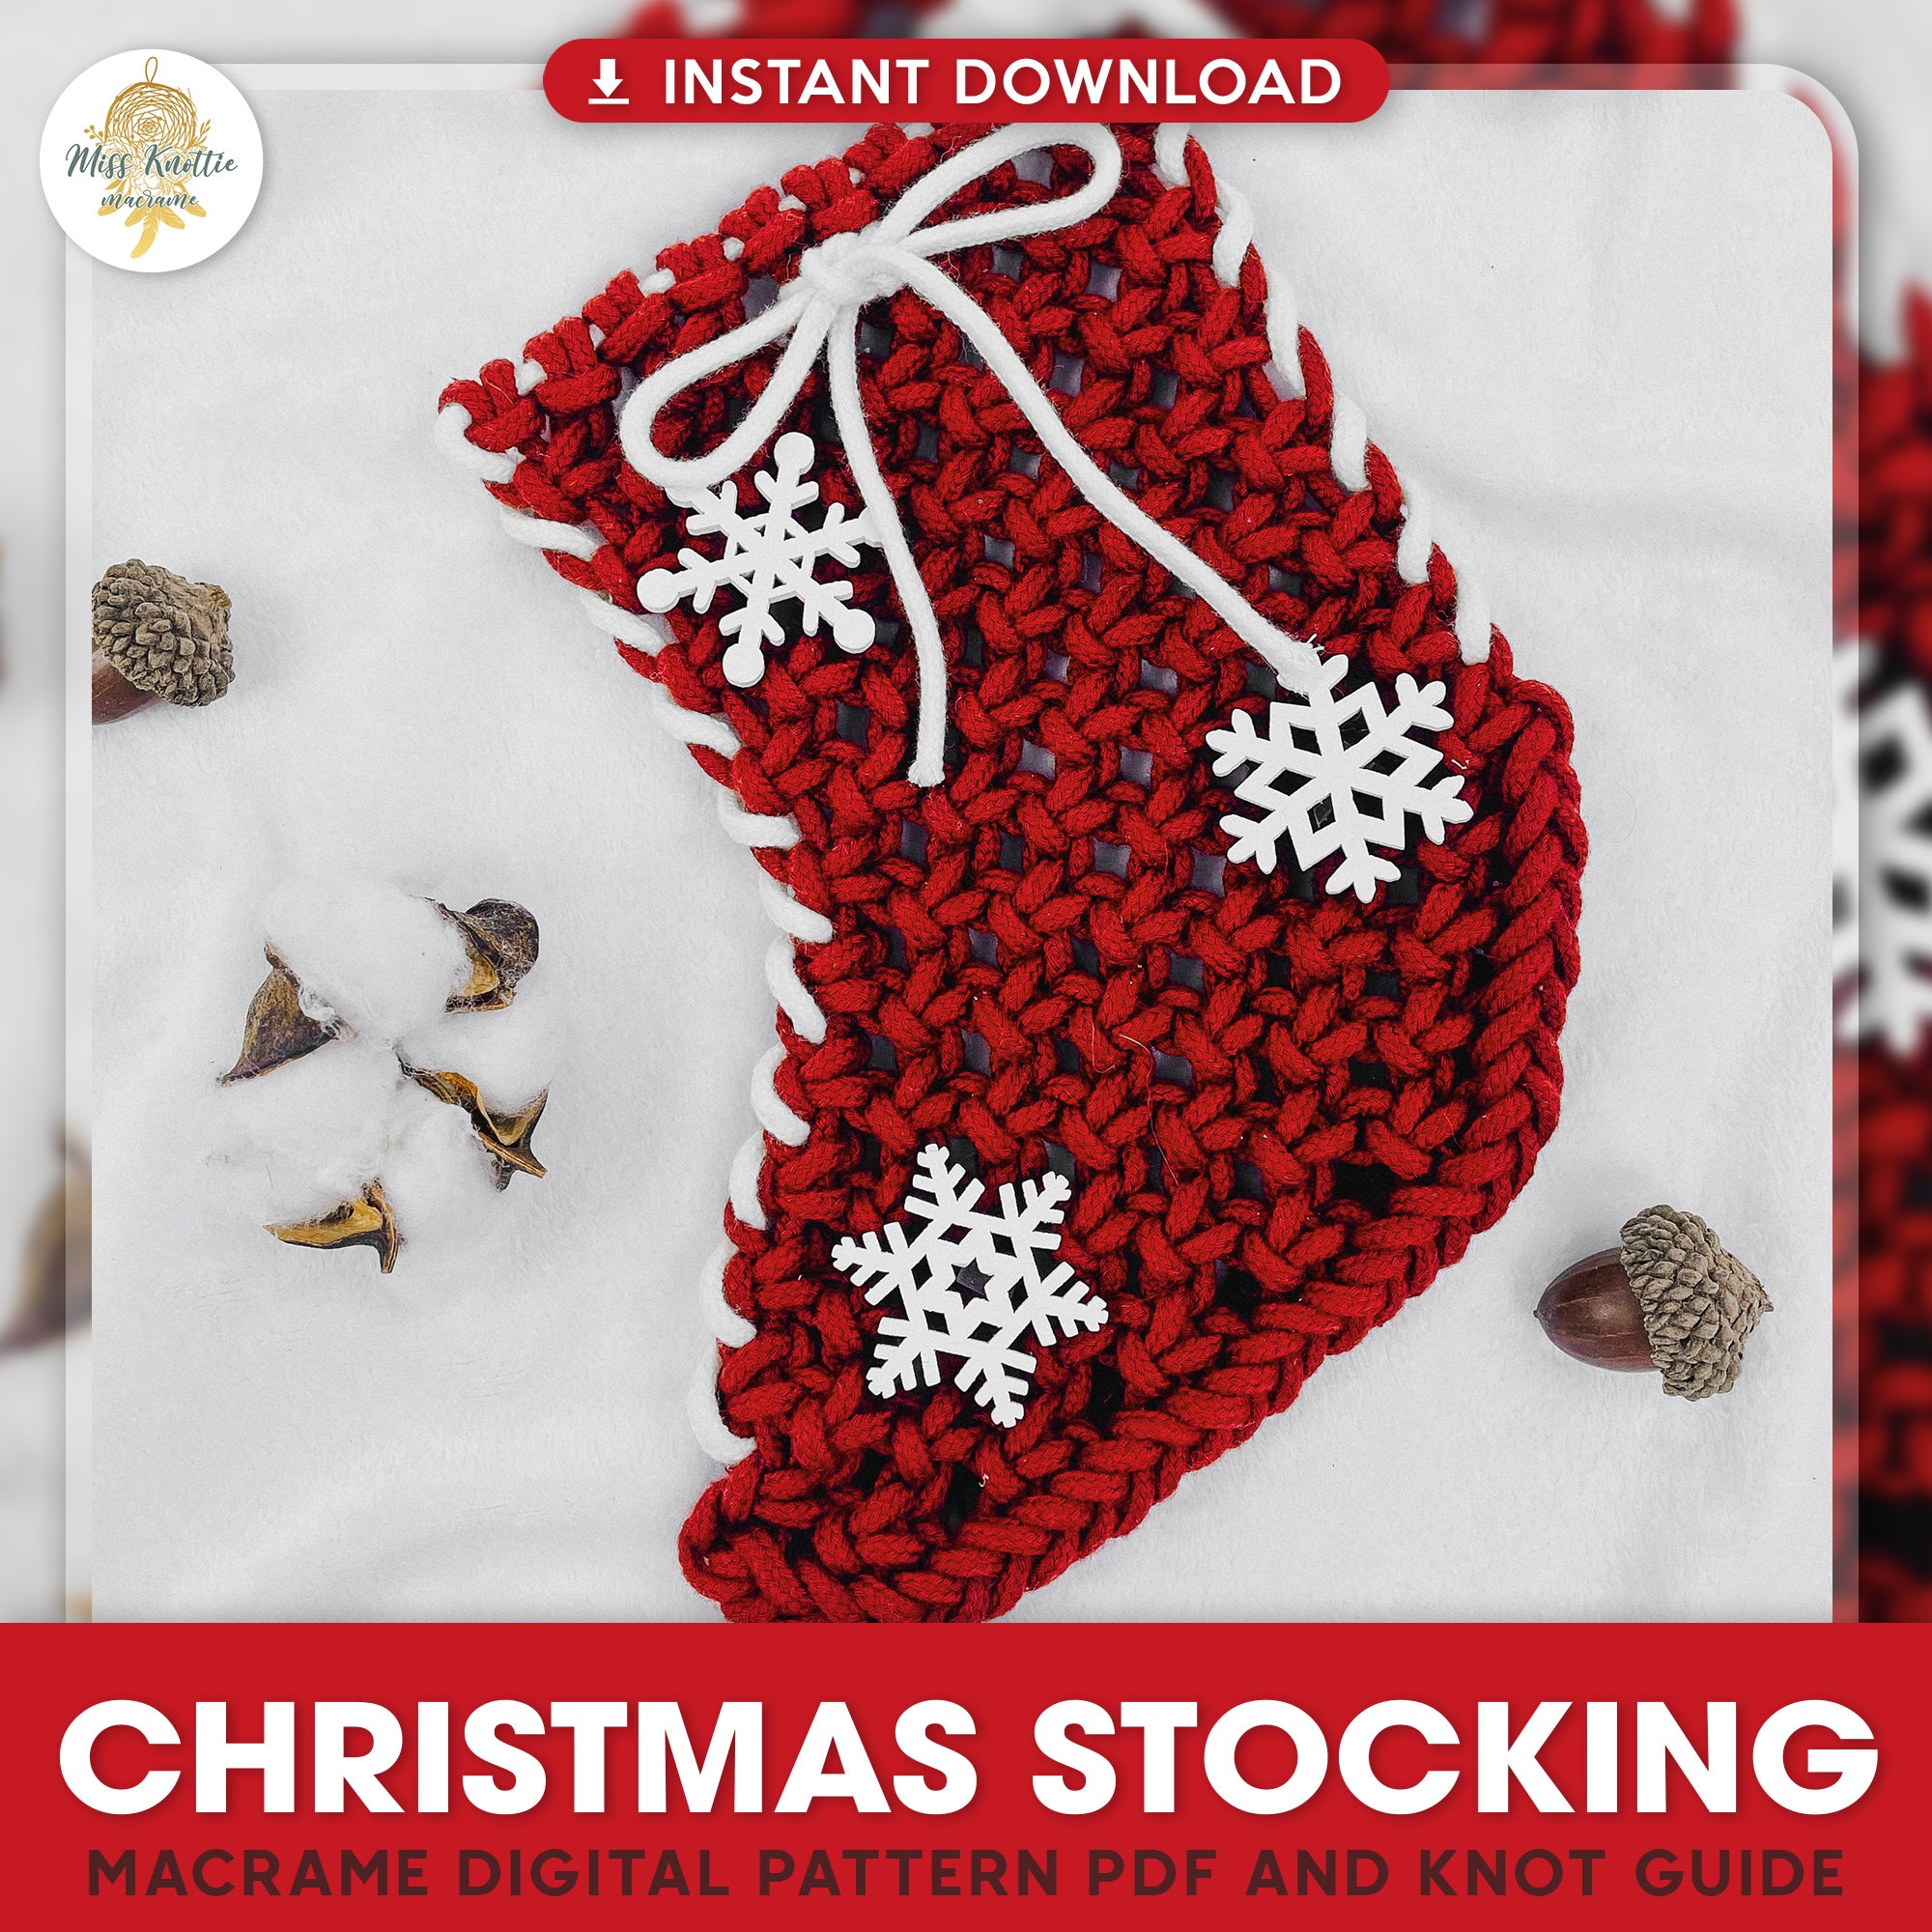 Macrame Christmas Stocking Pattern - Digital PDF and Knot Guide